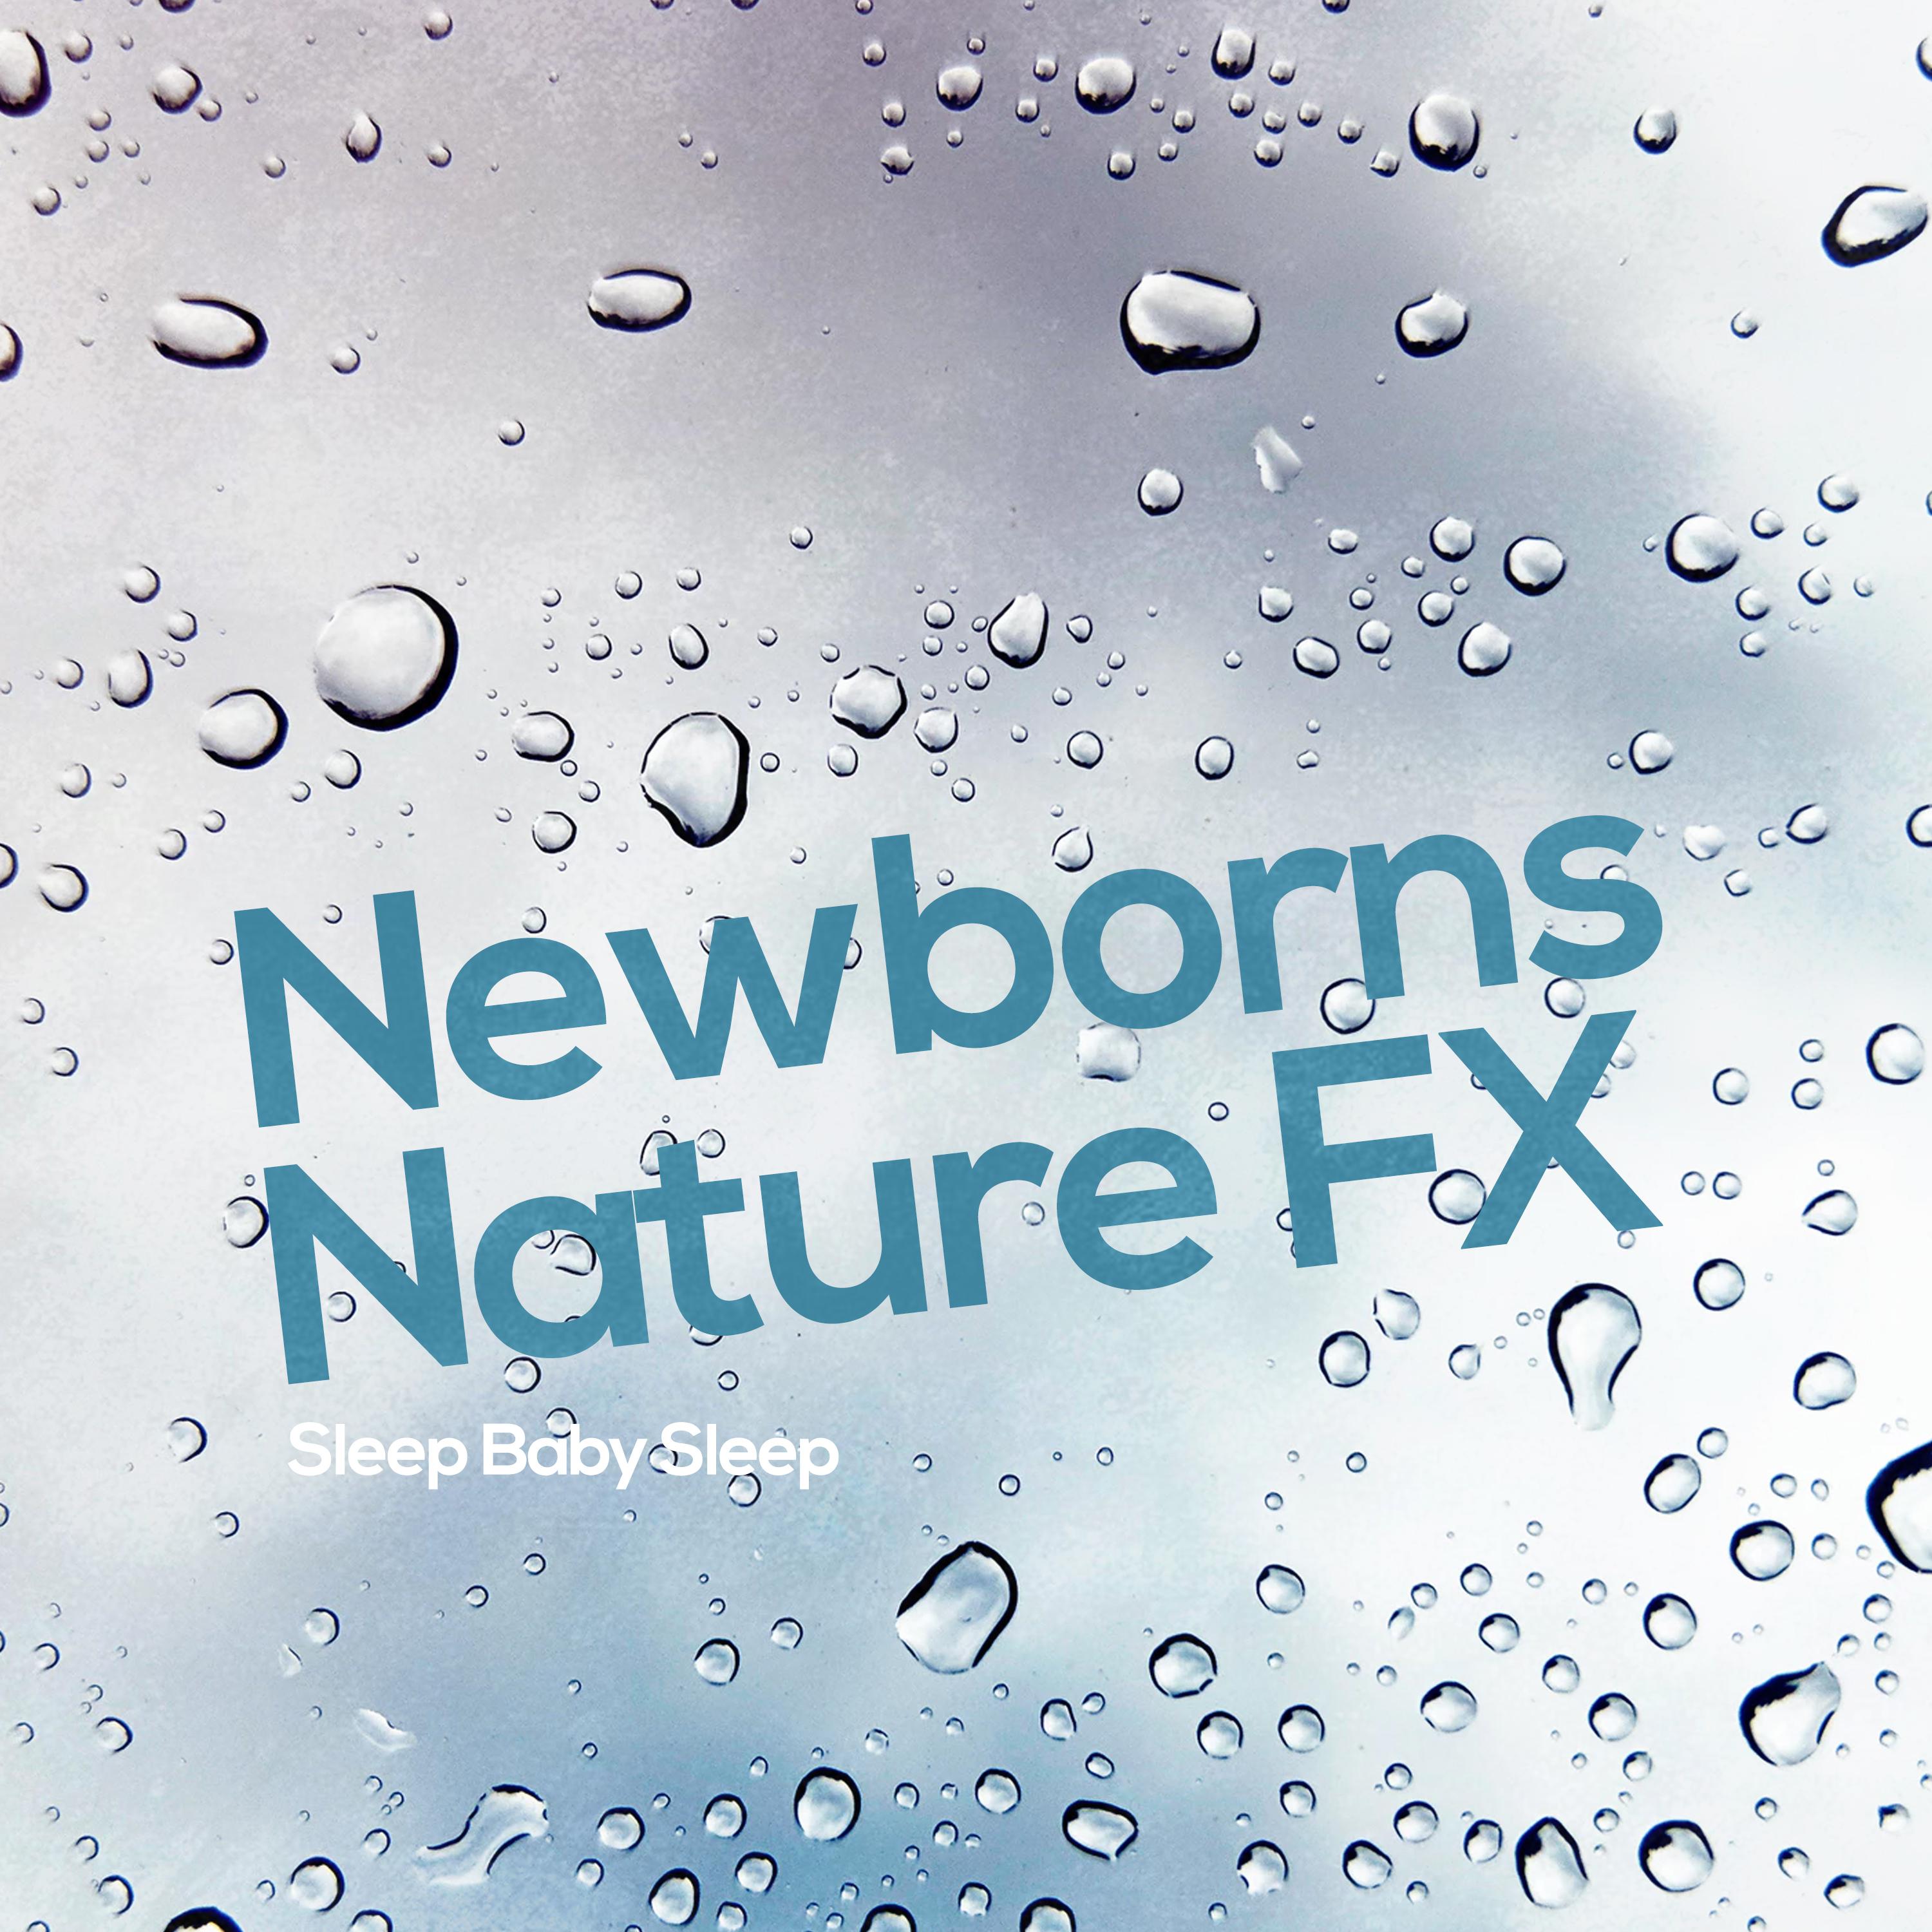 Newborns Nature FX